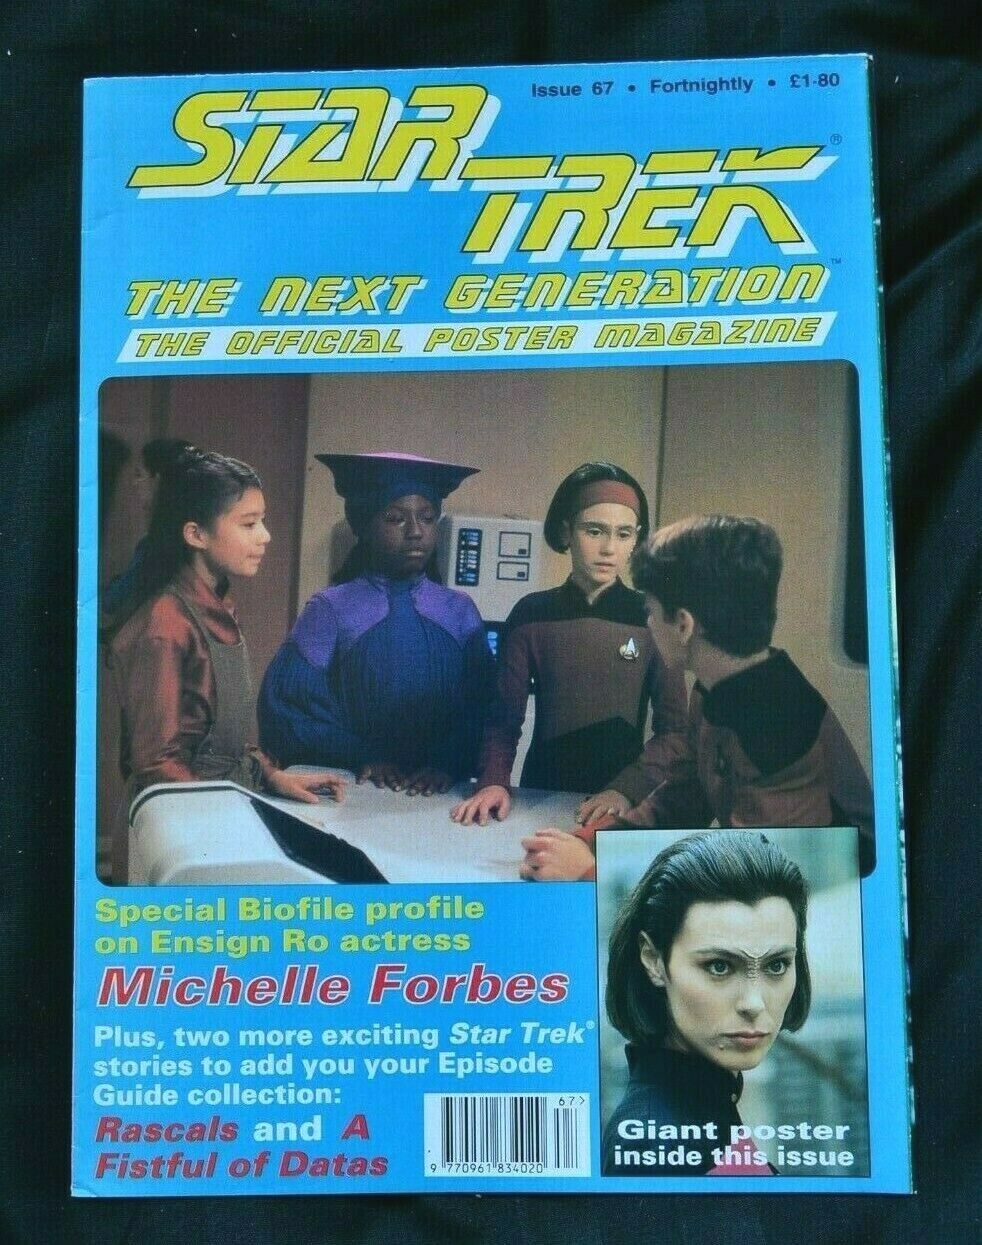 Star Trek: The Next Generation Poster Magazine #67